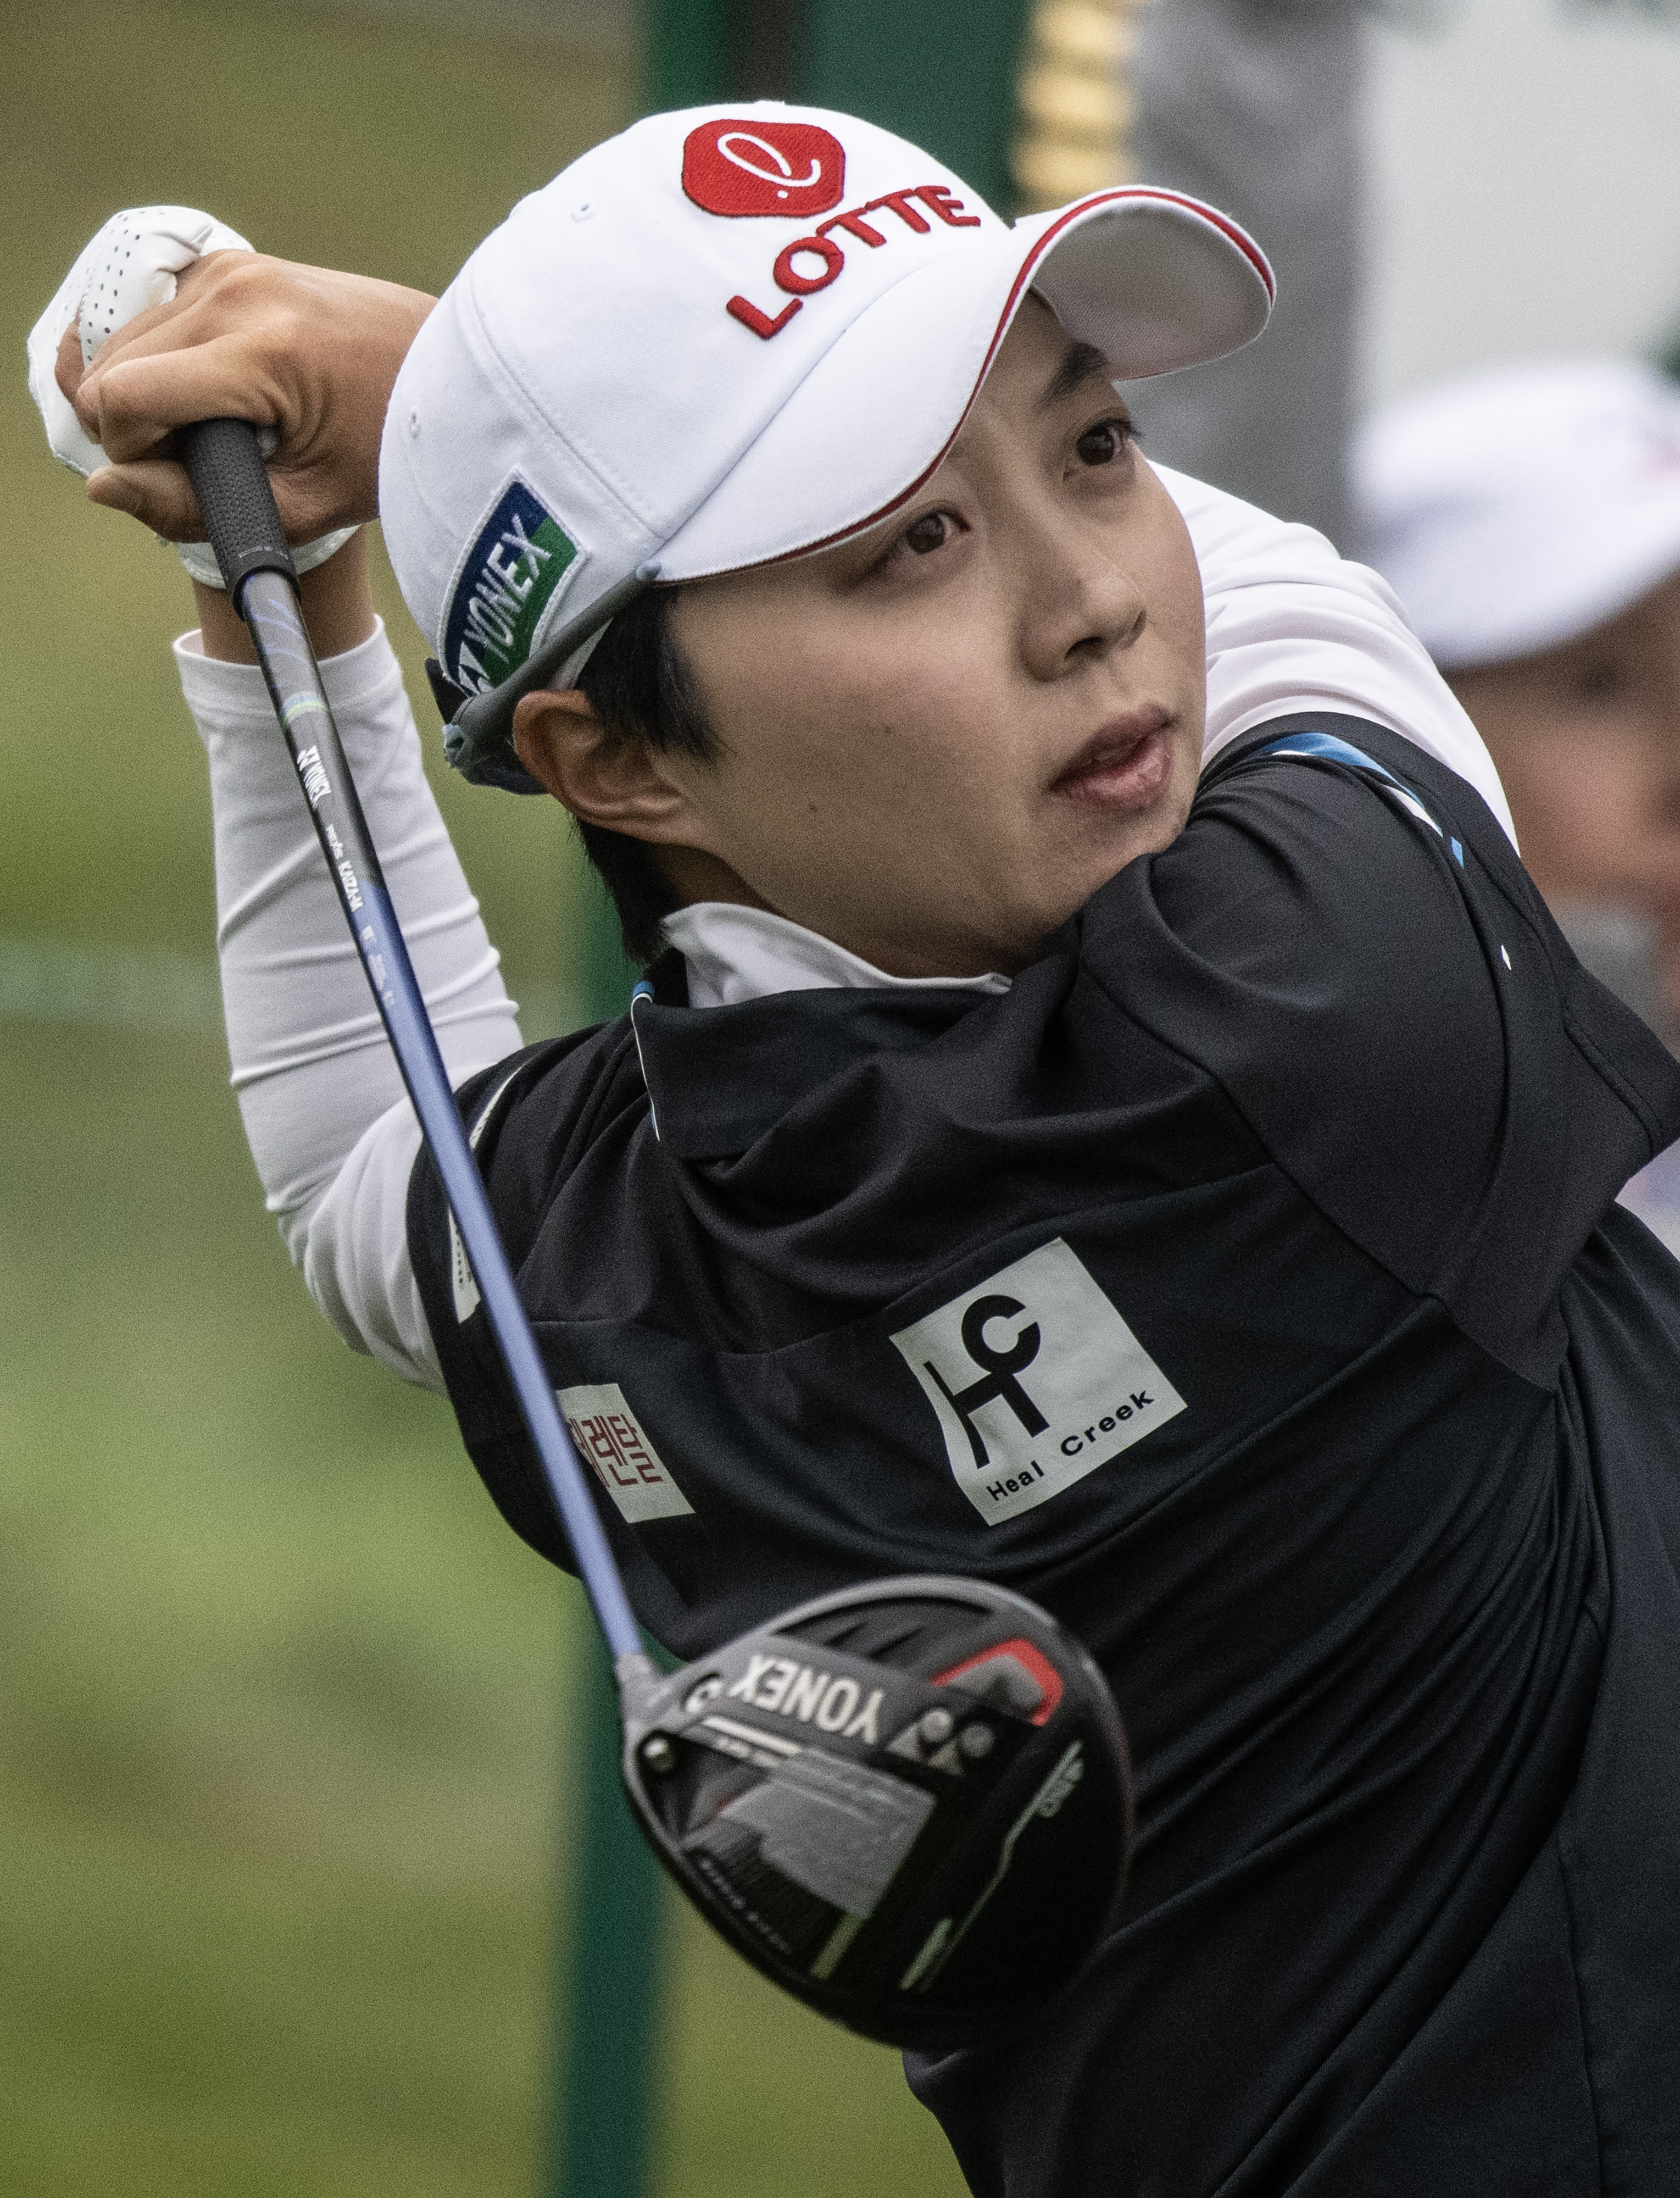 2023  US여자오픈 골프 대회 1라운드에서 공동 선두로 나선 김효주.  UPI 연합뉴스